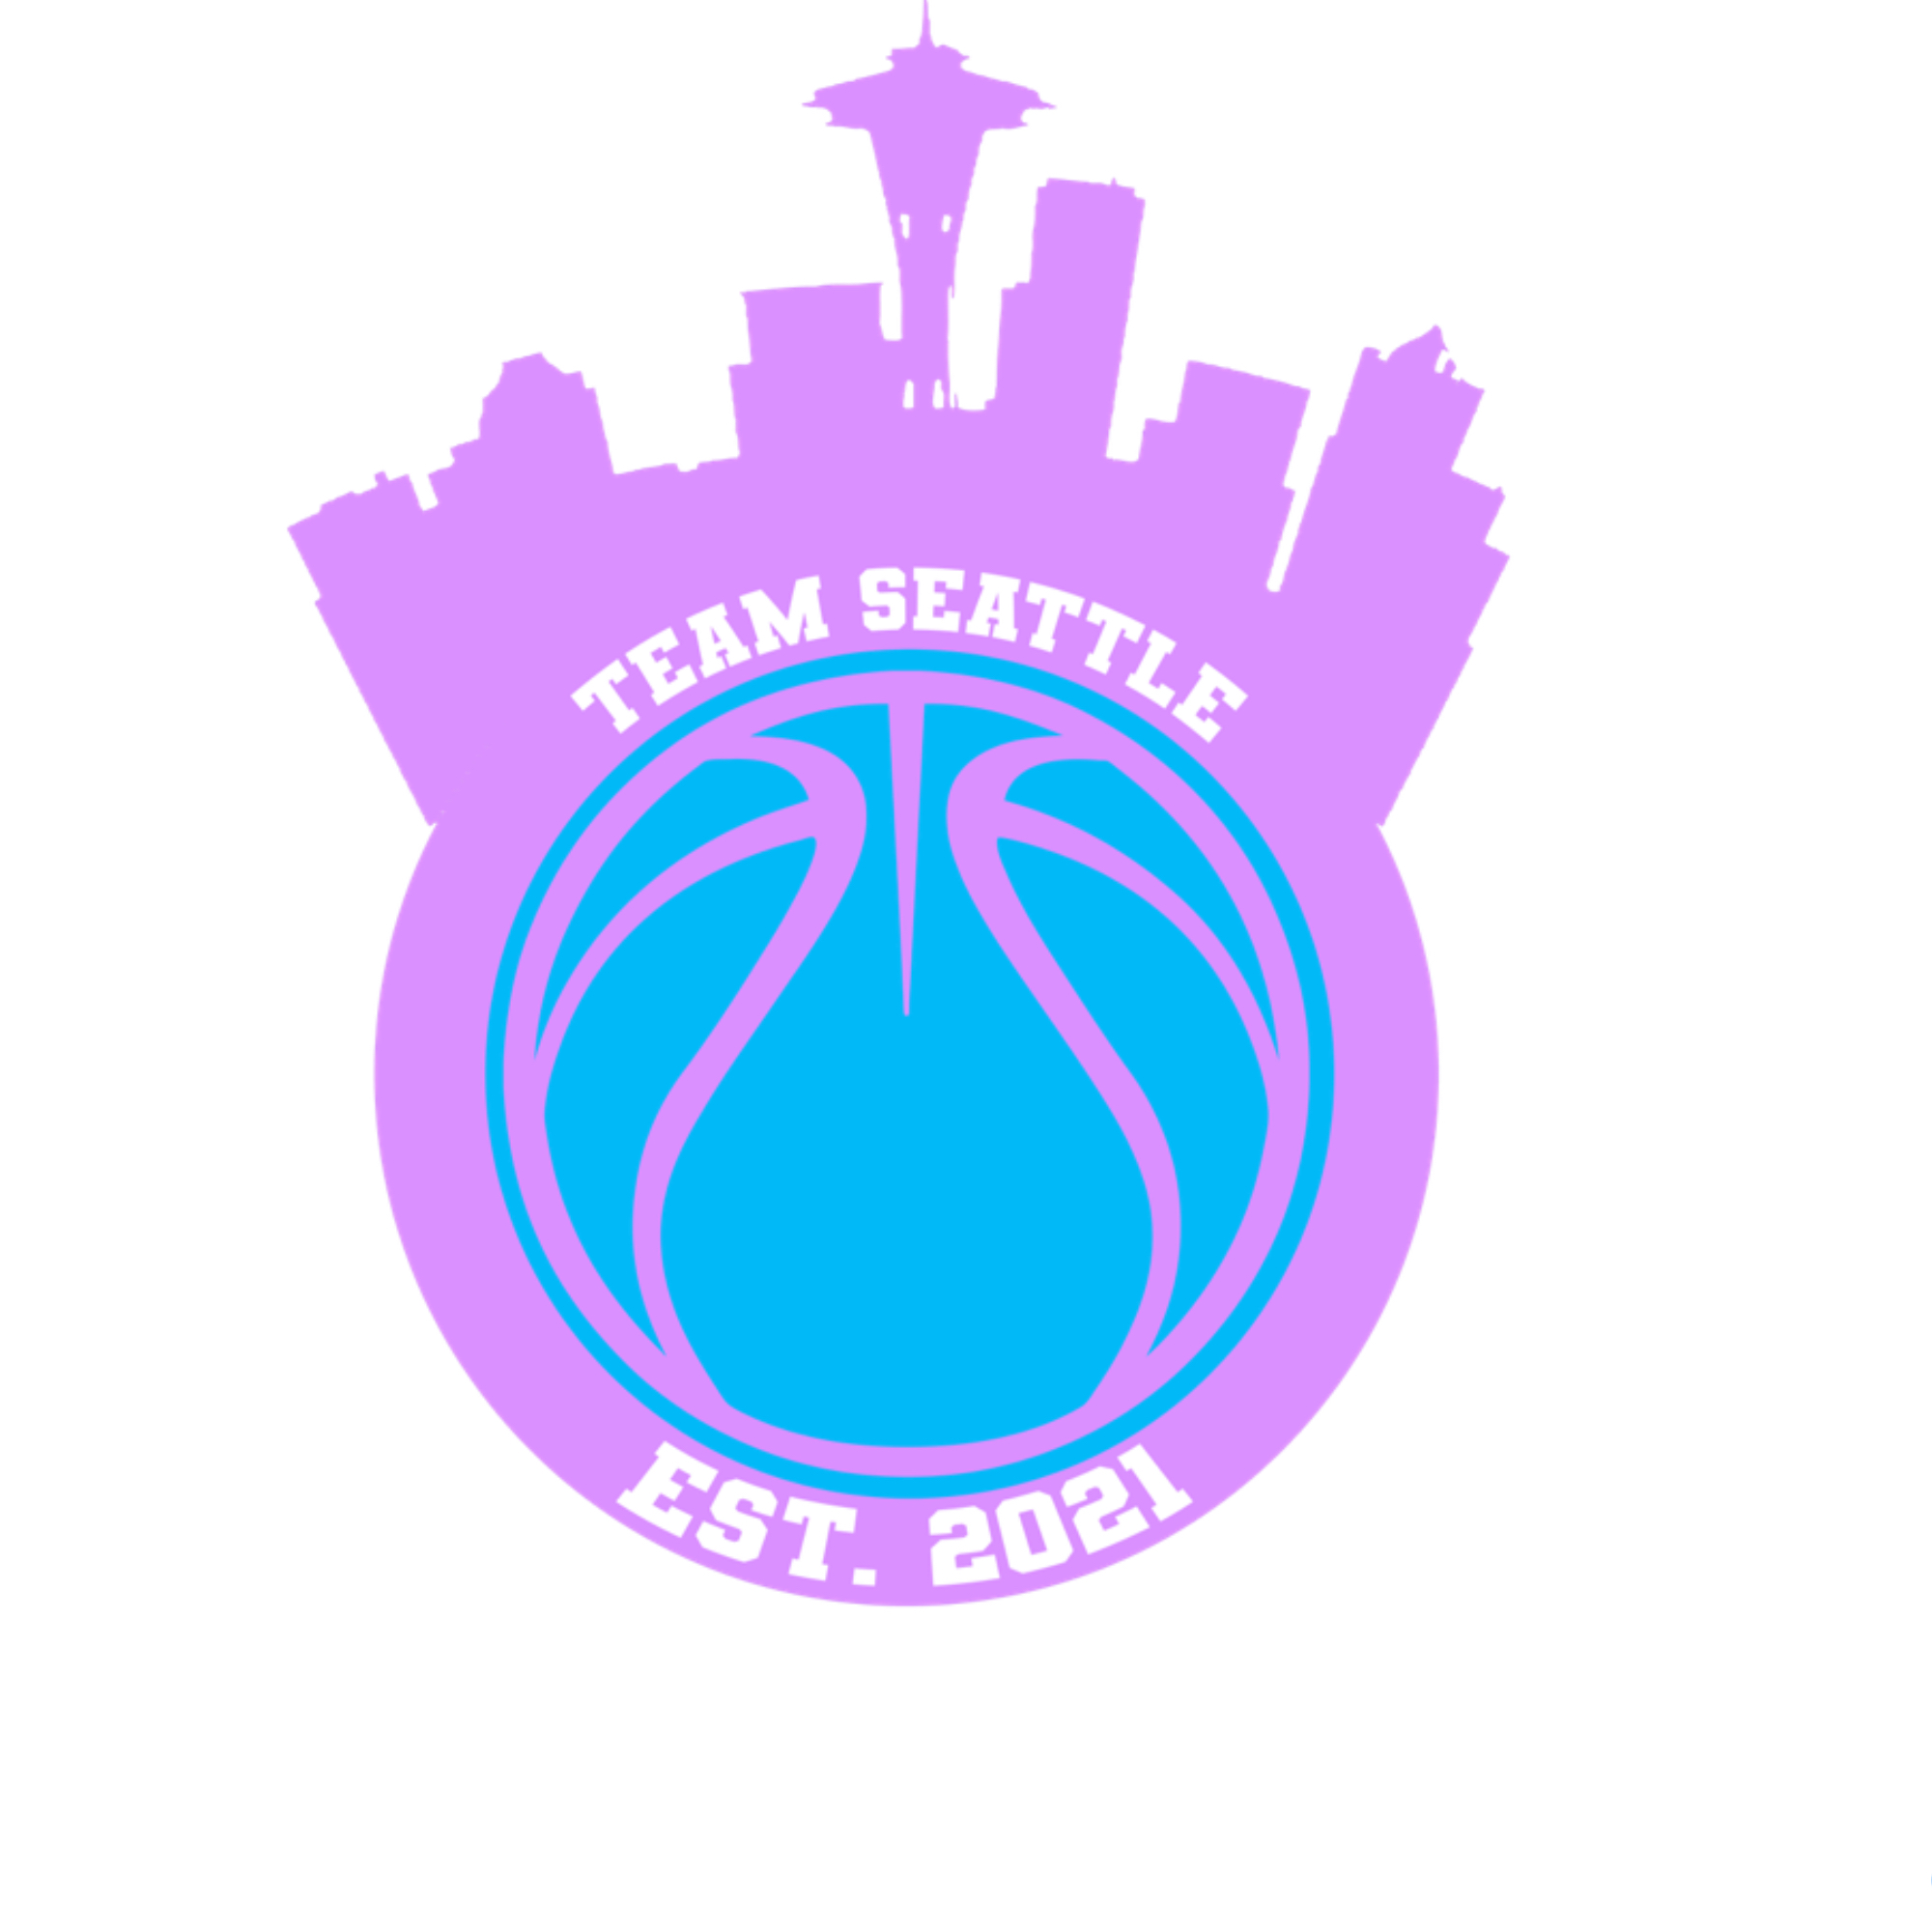 Team Seattle